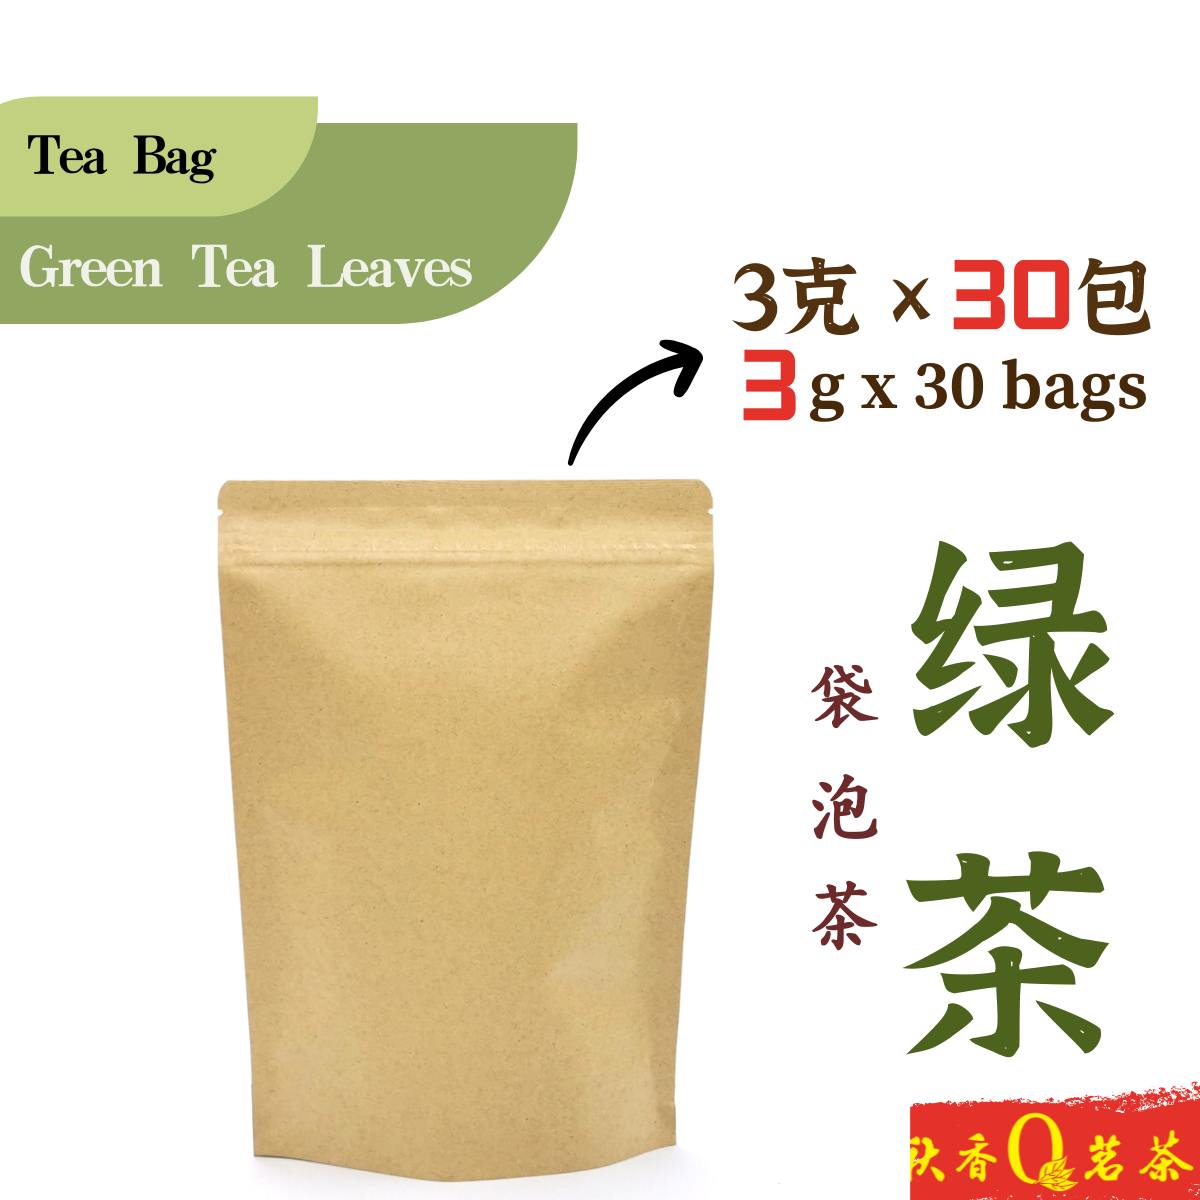 Pyramid Tea Bag 三角袋泡茶｜茶袋 (30 packs x 3g)